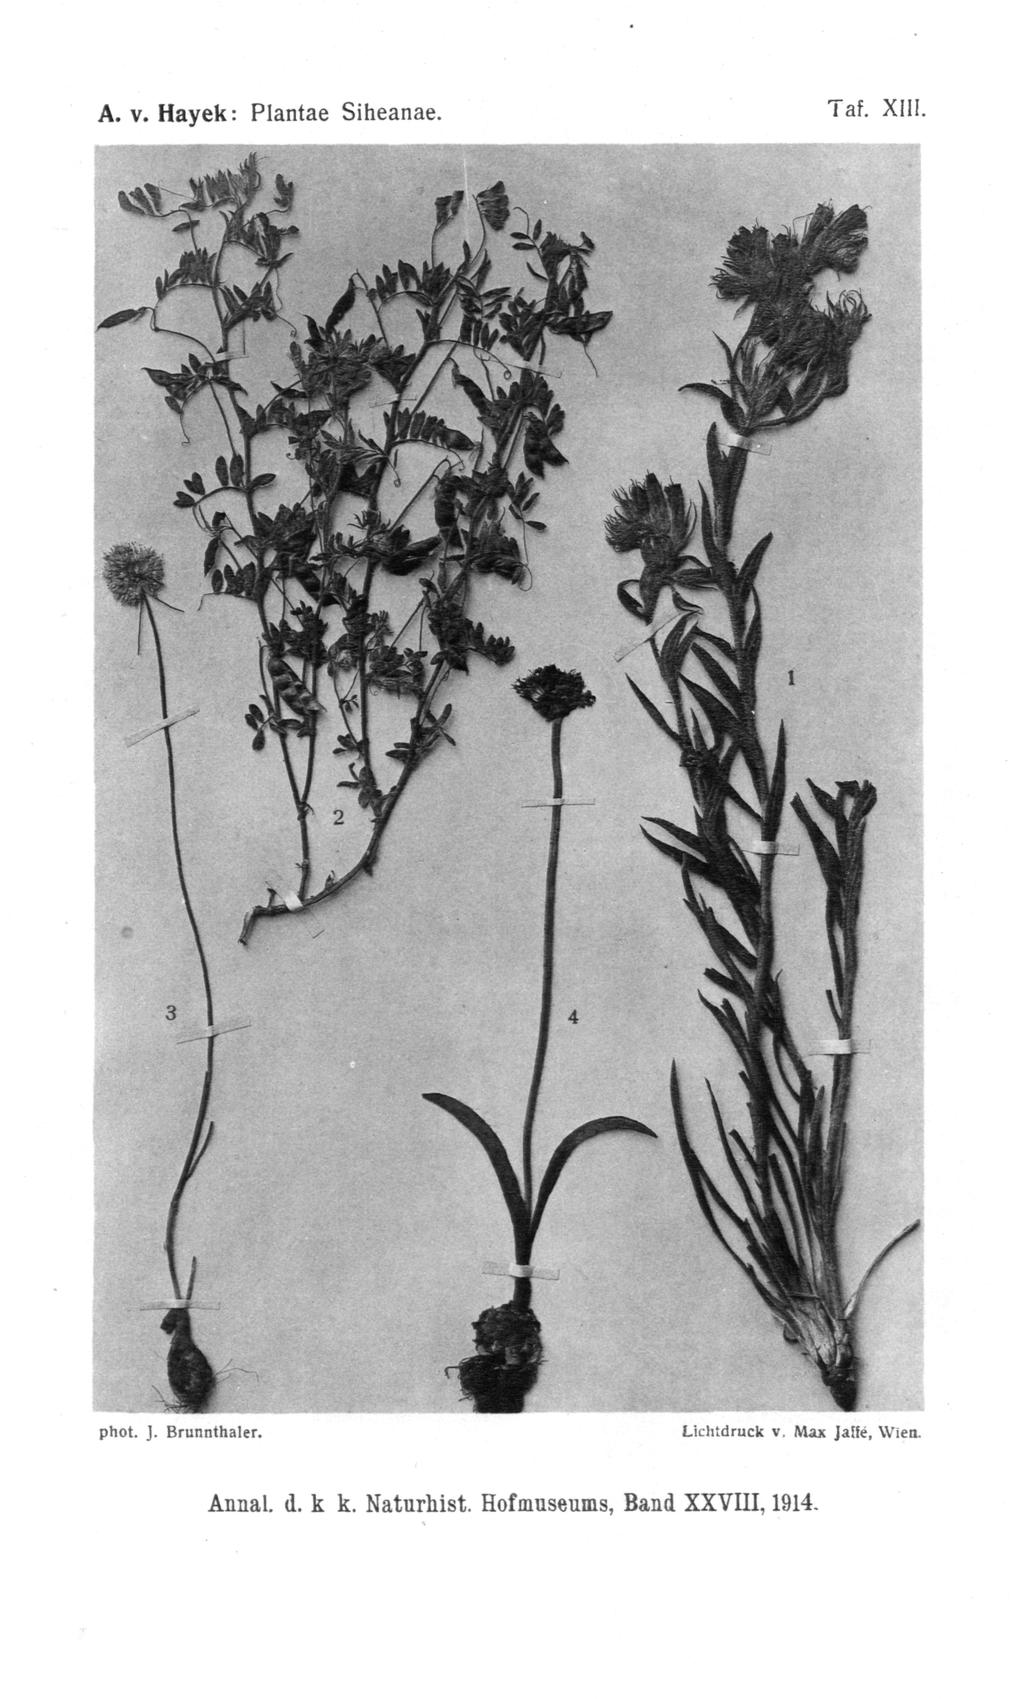 Taf. XIII. A. v. Hayek: Plantae Siheanae. phot. j. Brunnthaler.